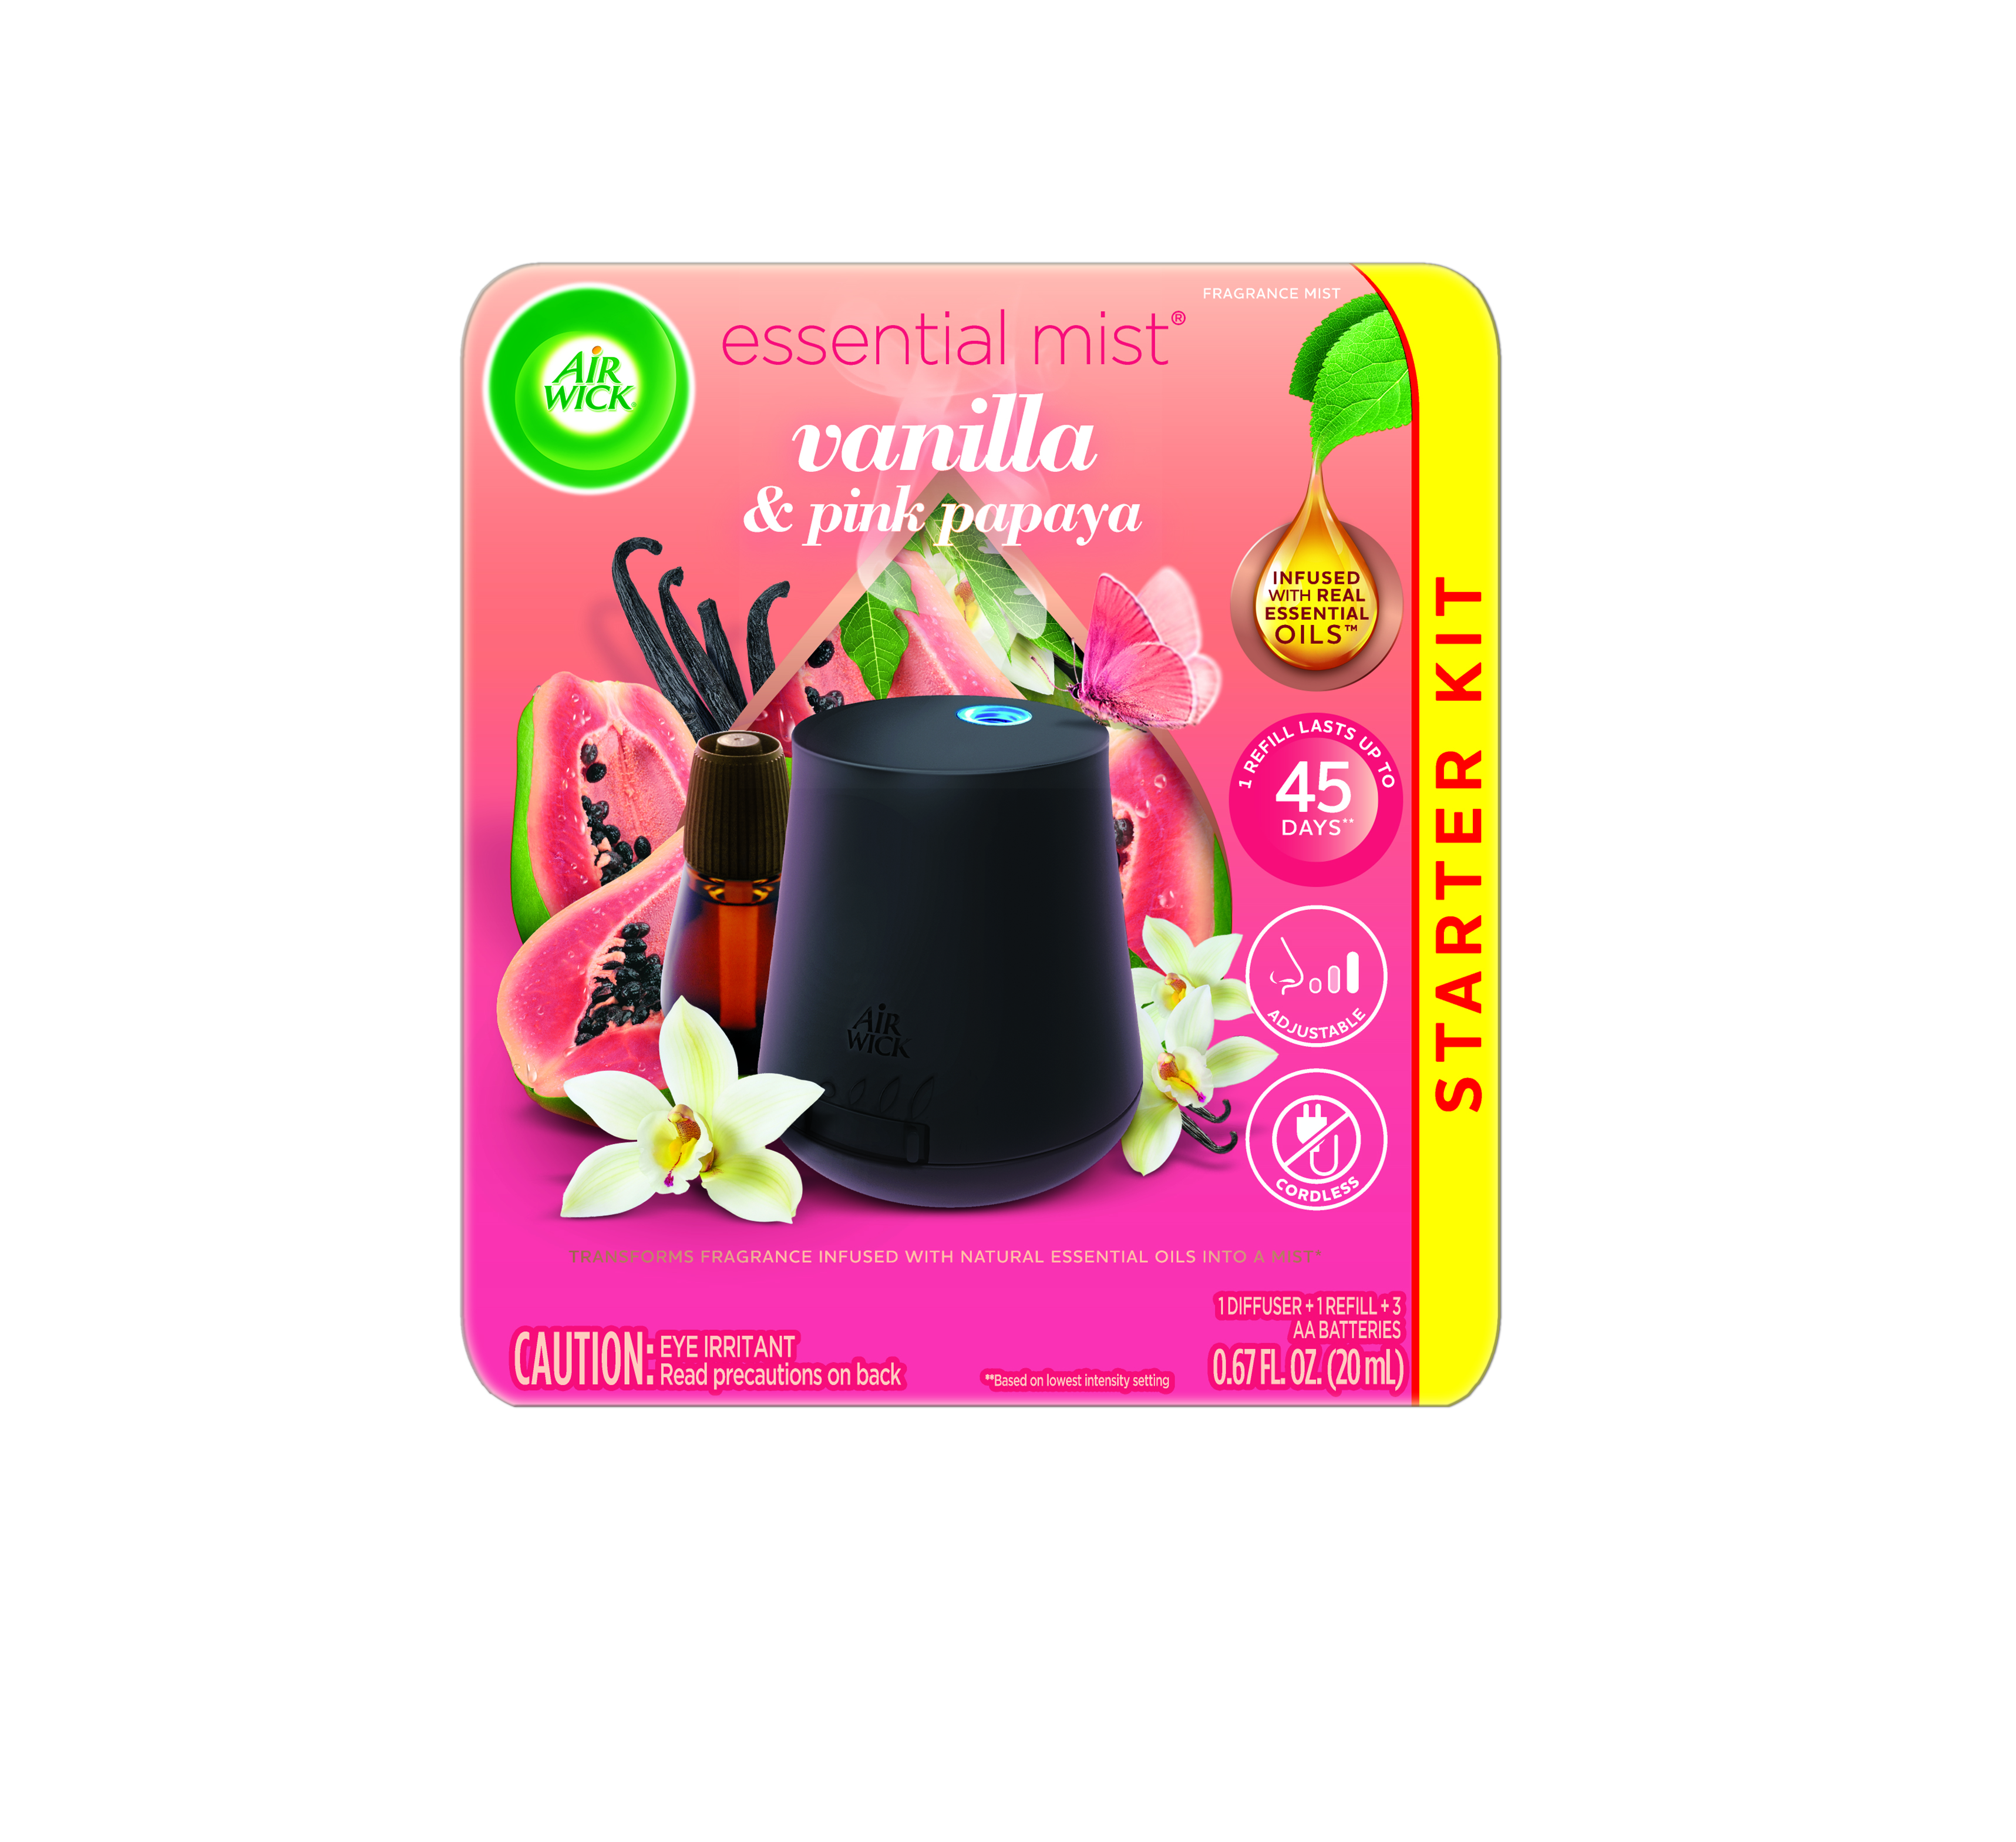 AIR WICK® Essential Mist - Vanilla & Pink Papaya